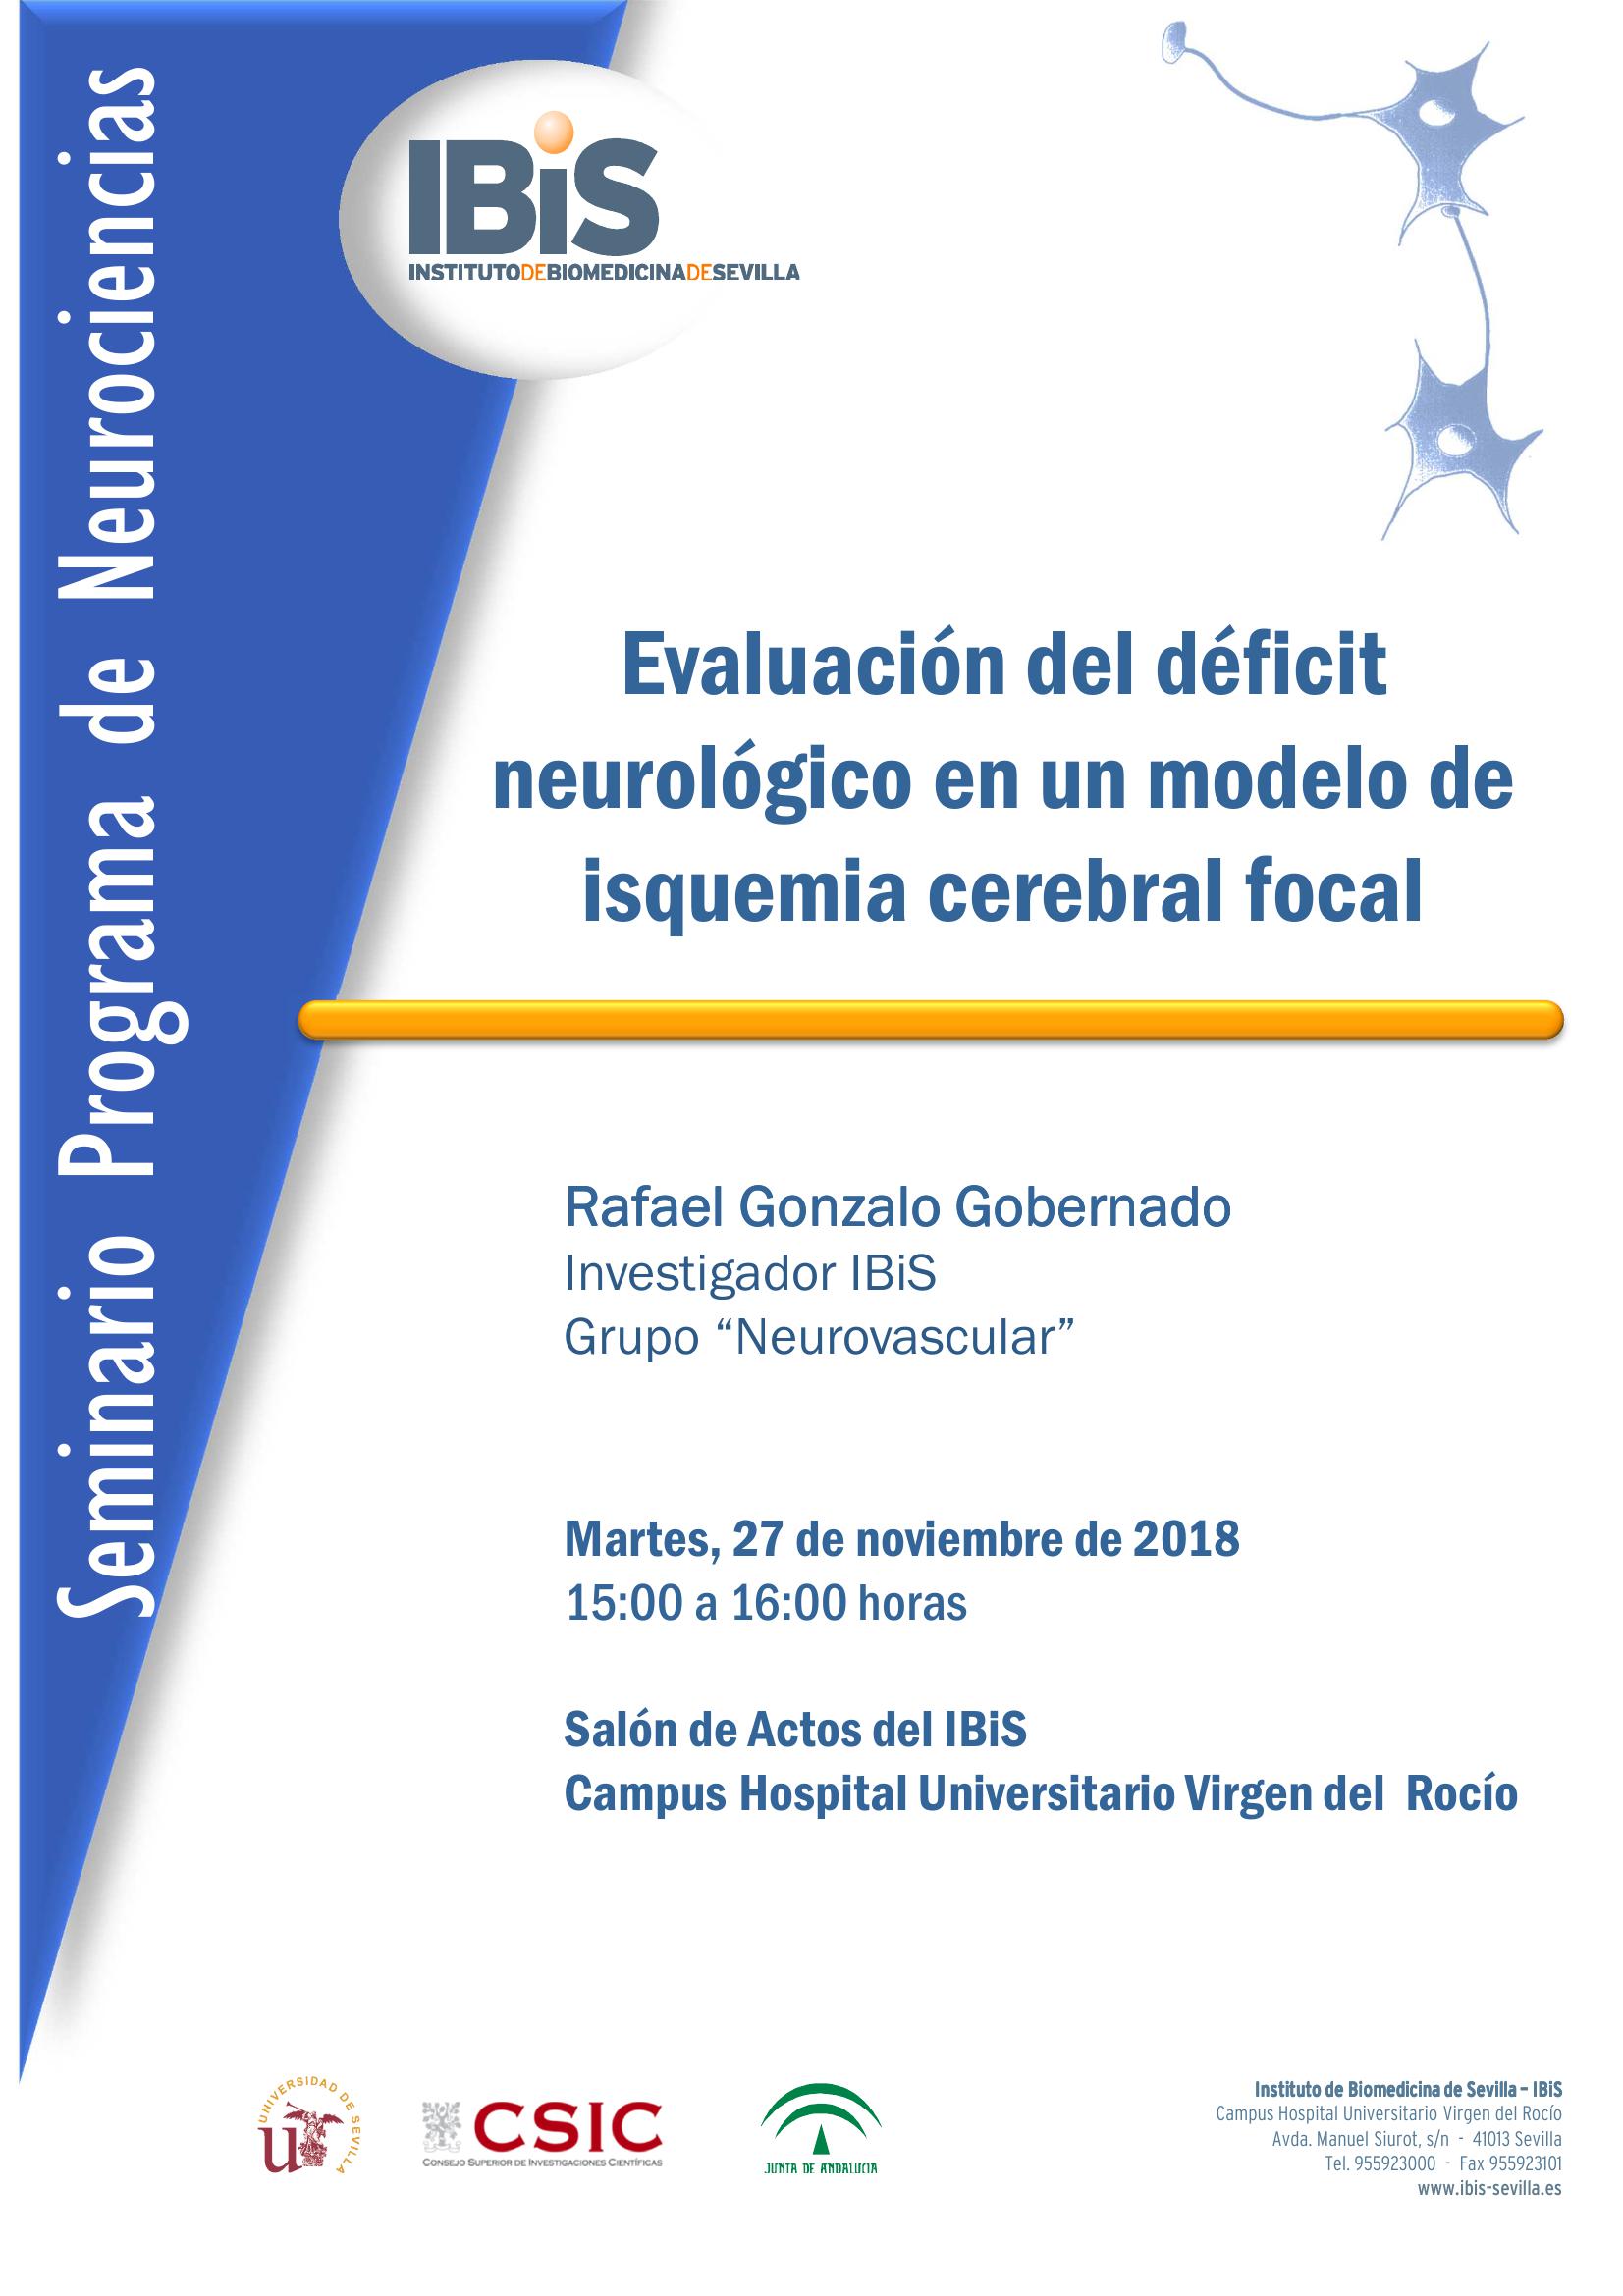 Poster: Evaluación del déficit neurológico en un modelo de isquemia cerebral focal